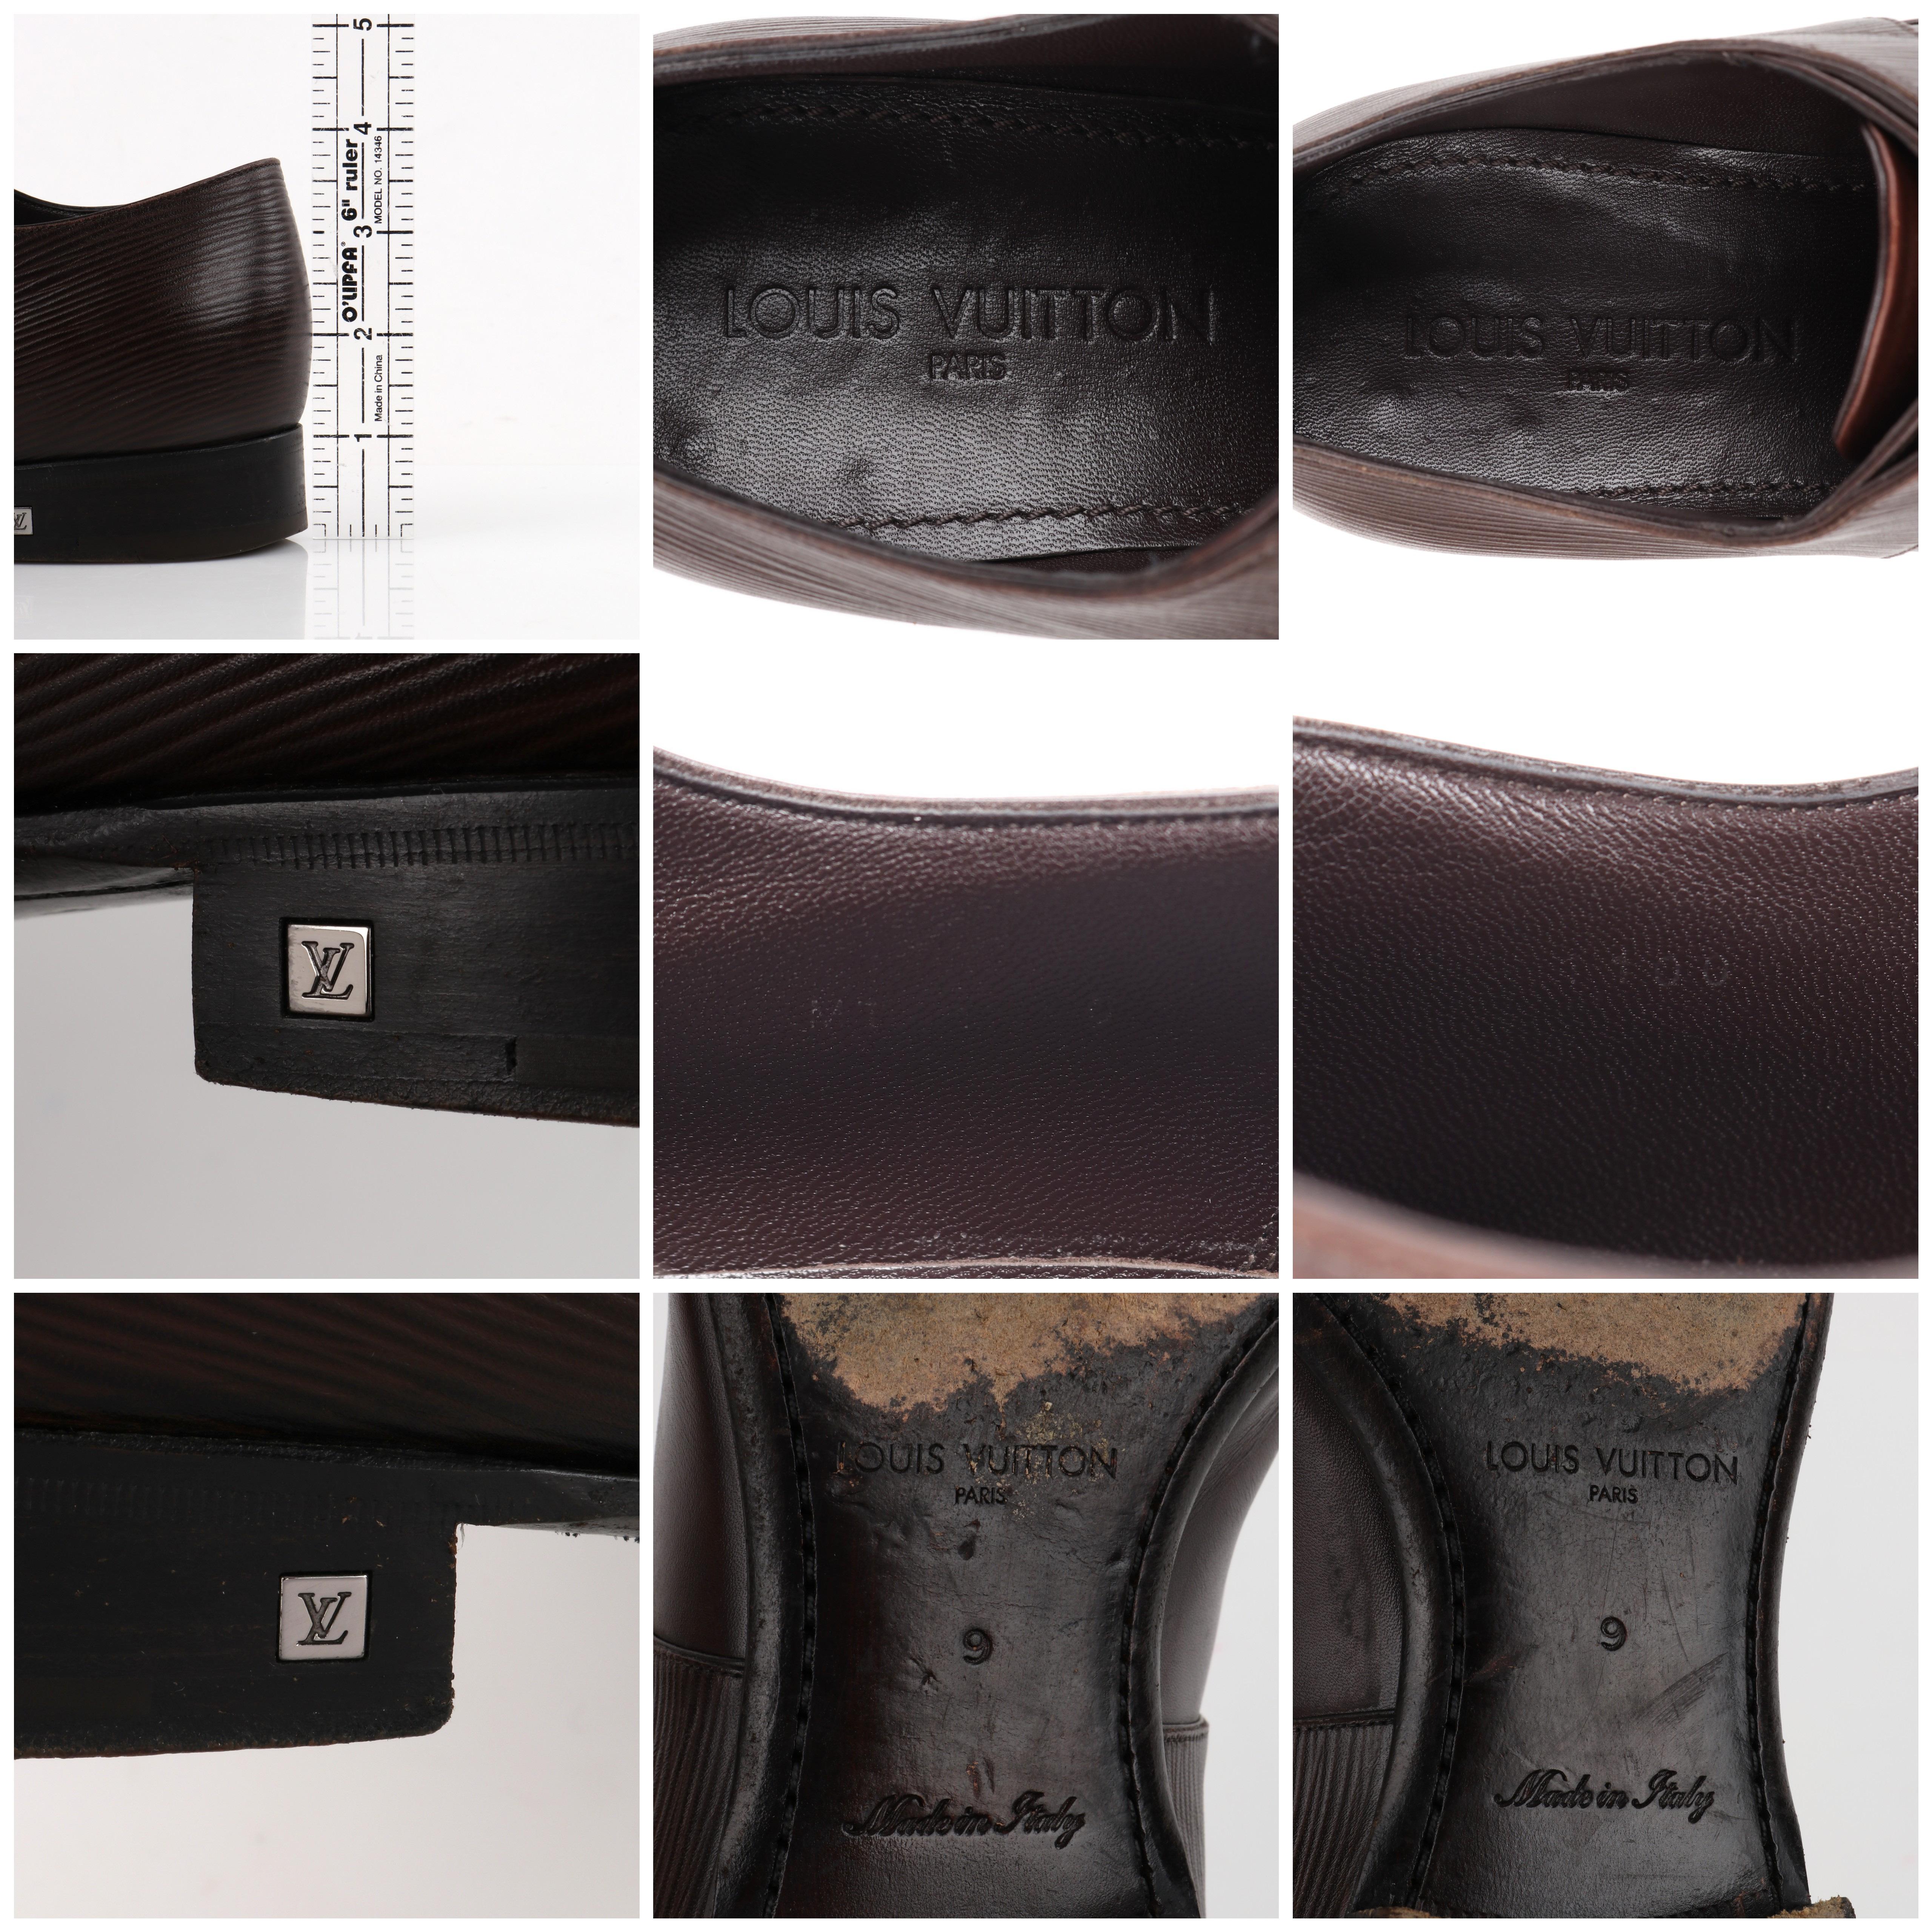 LOUIS VUITTON Dark Brown Polished Epi Leather Classic Cap Toe Dress Shoes 3